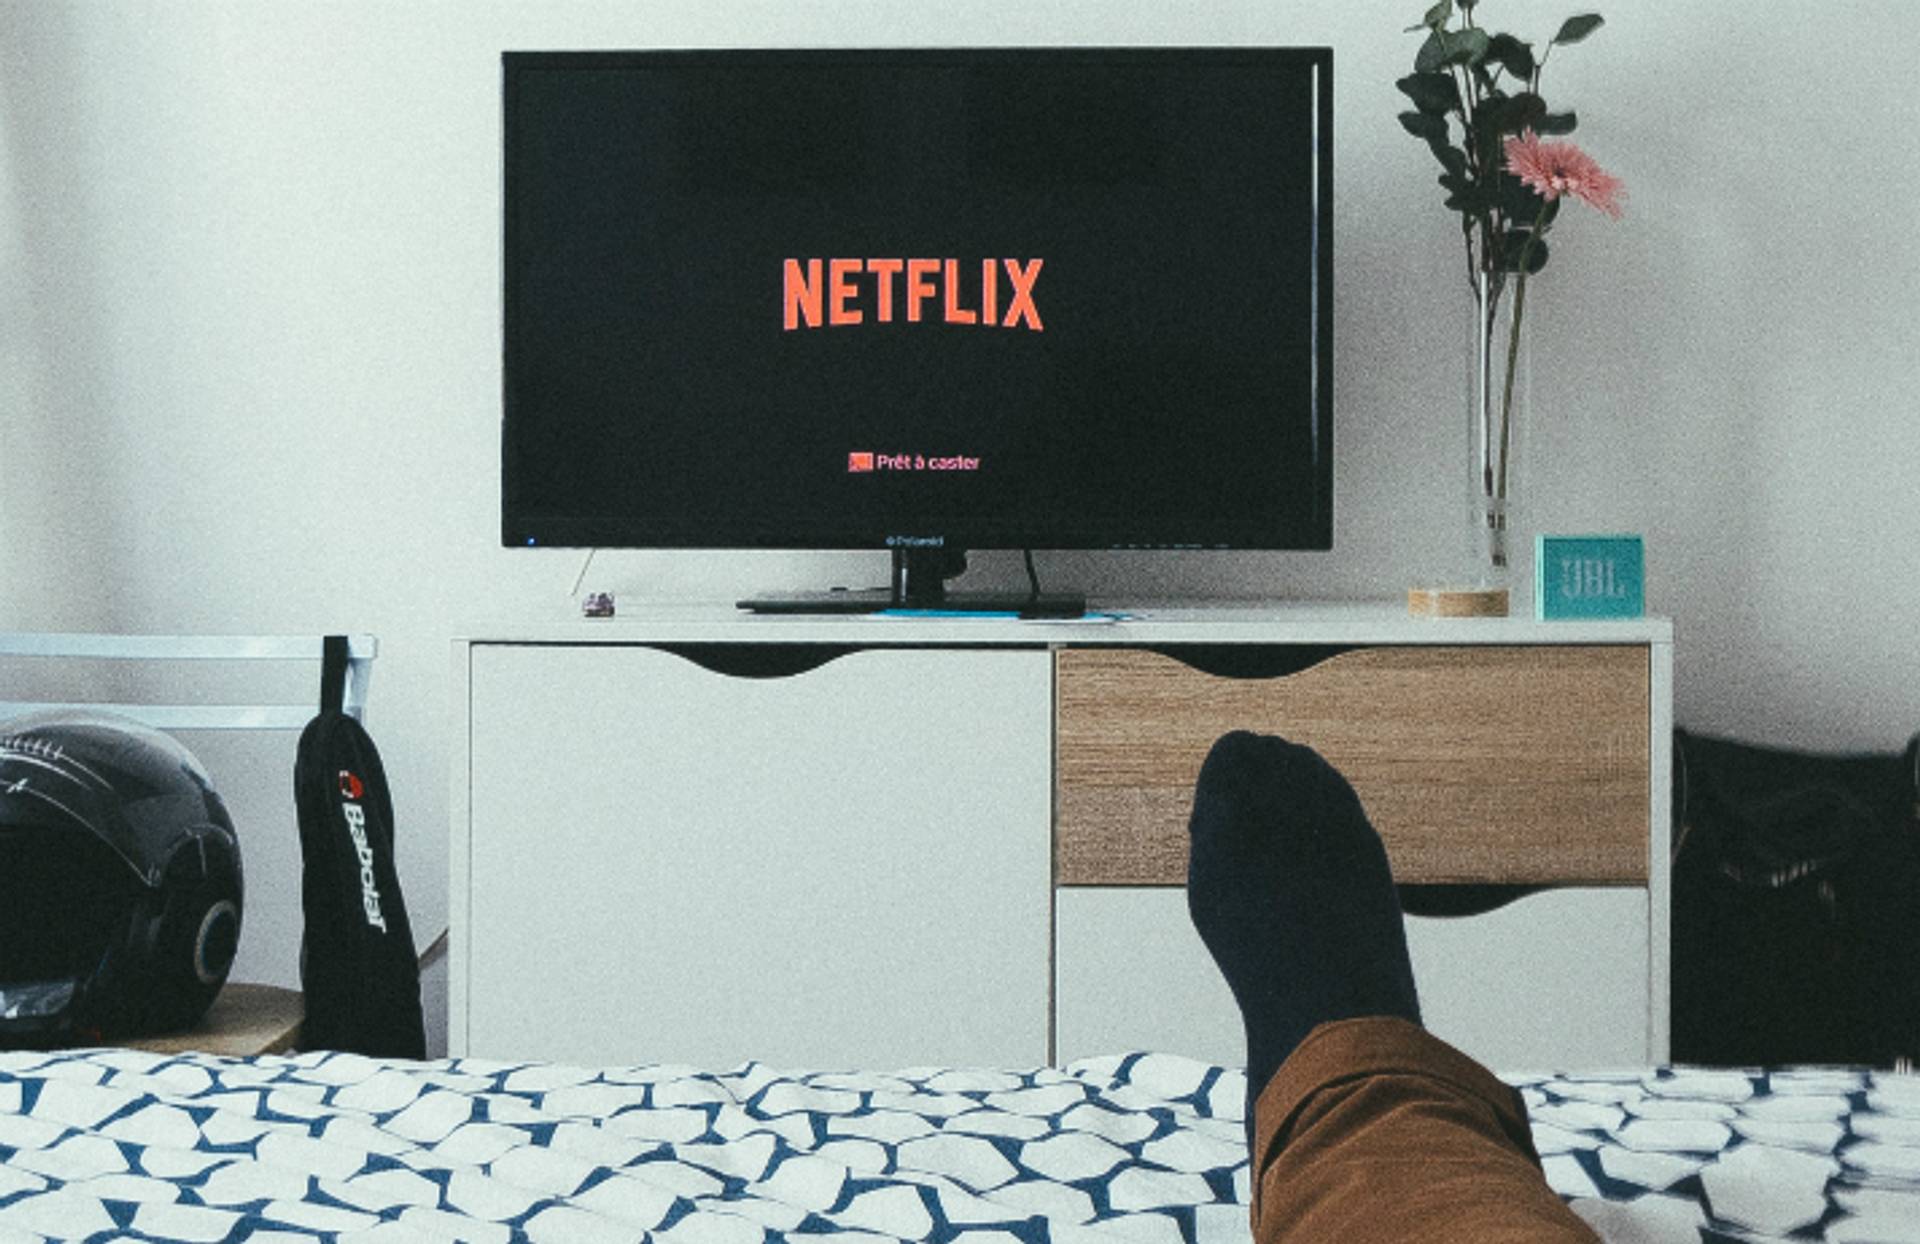 Canal+ Netflix bundle offers simple subscription option